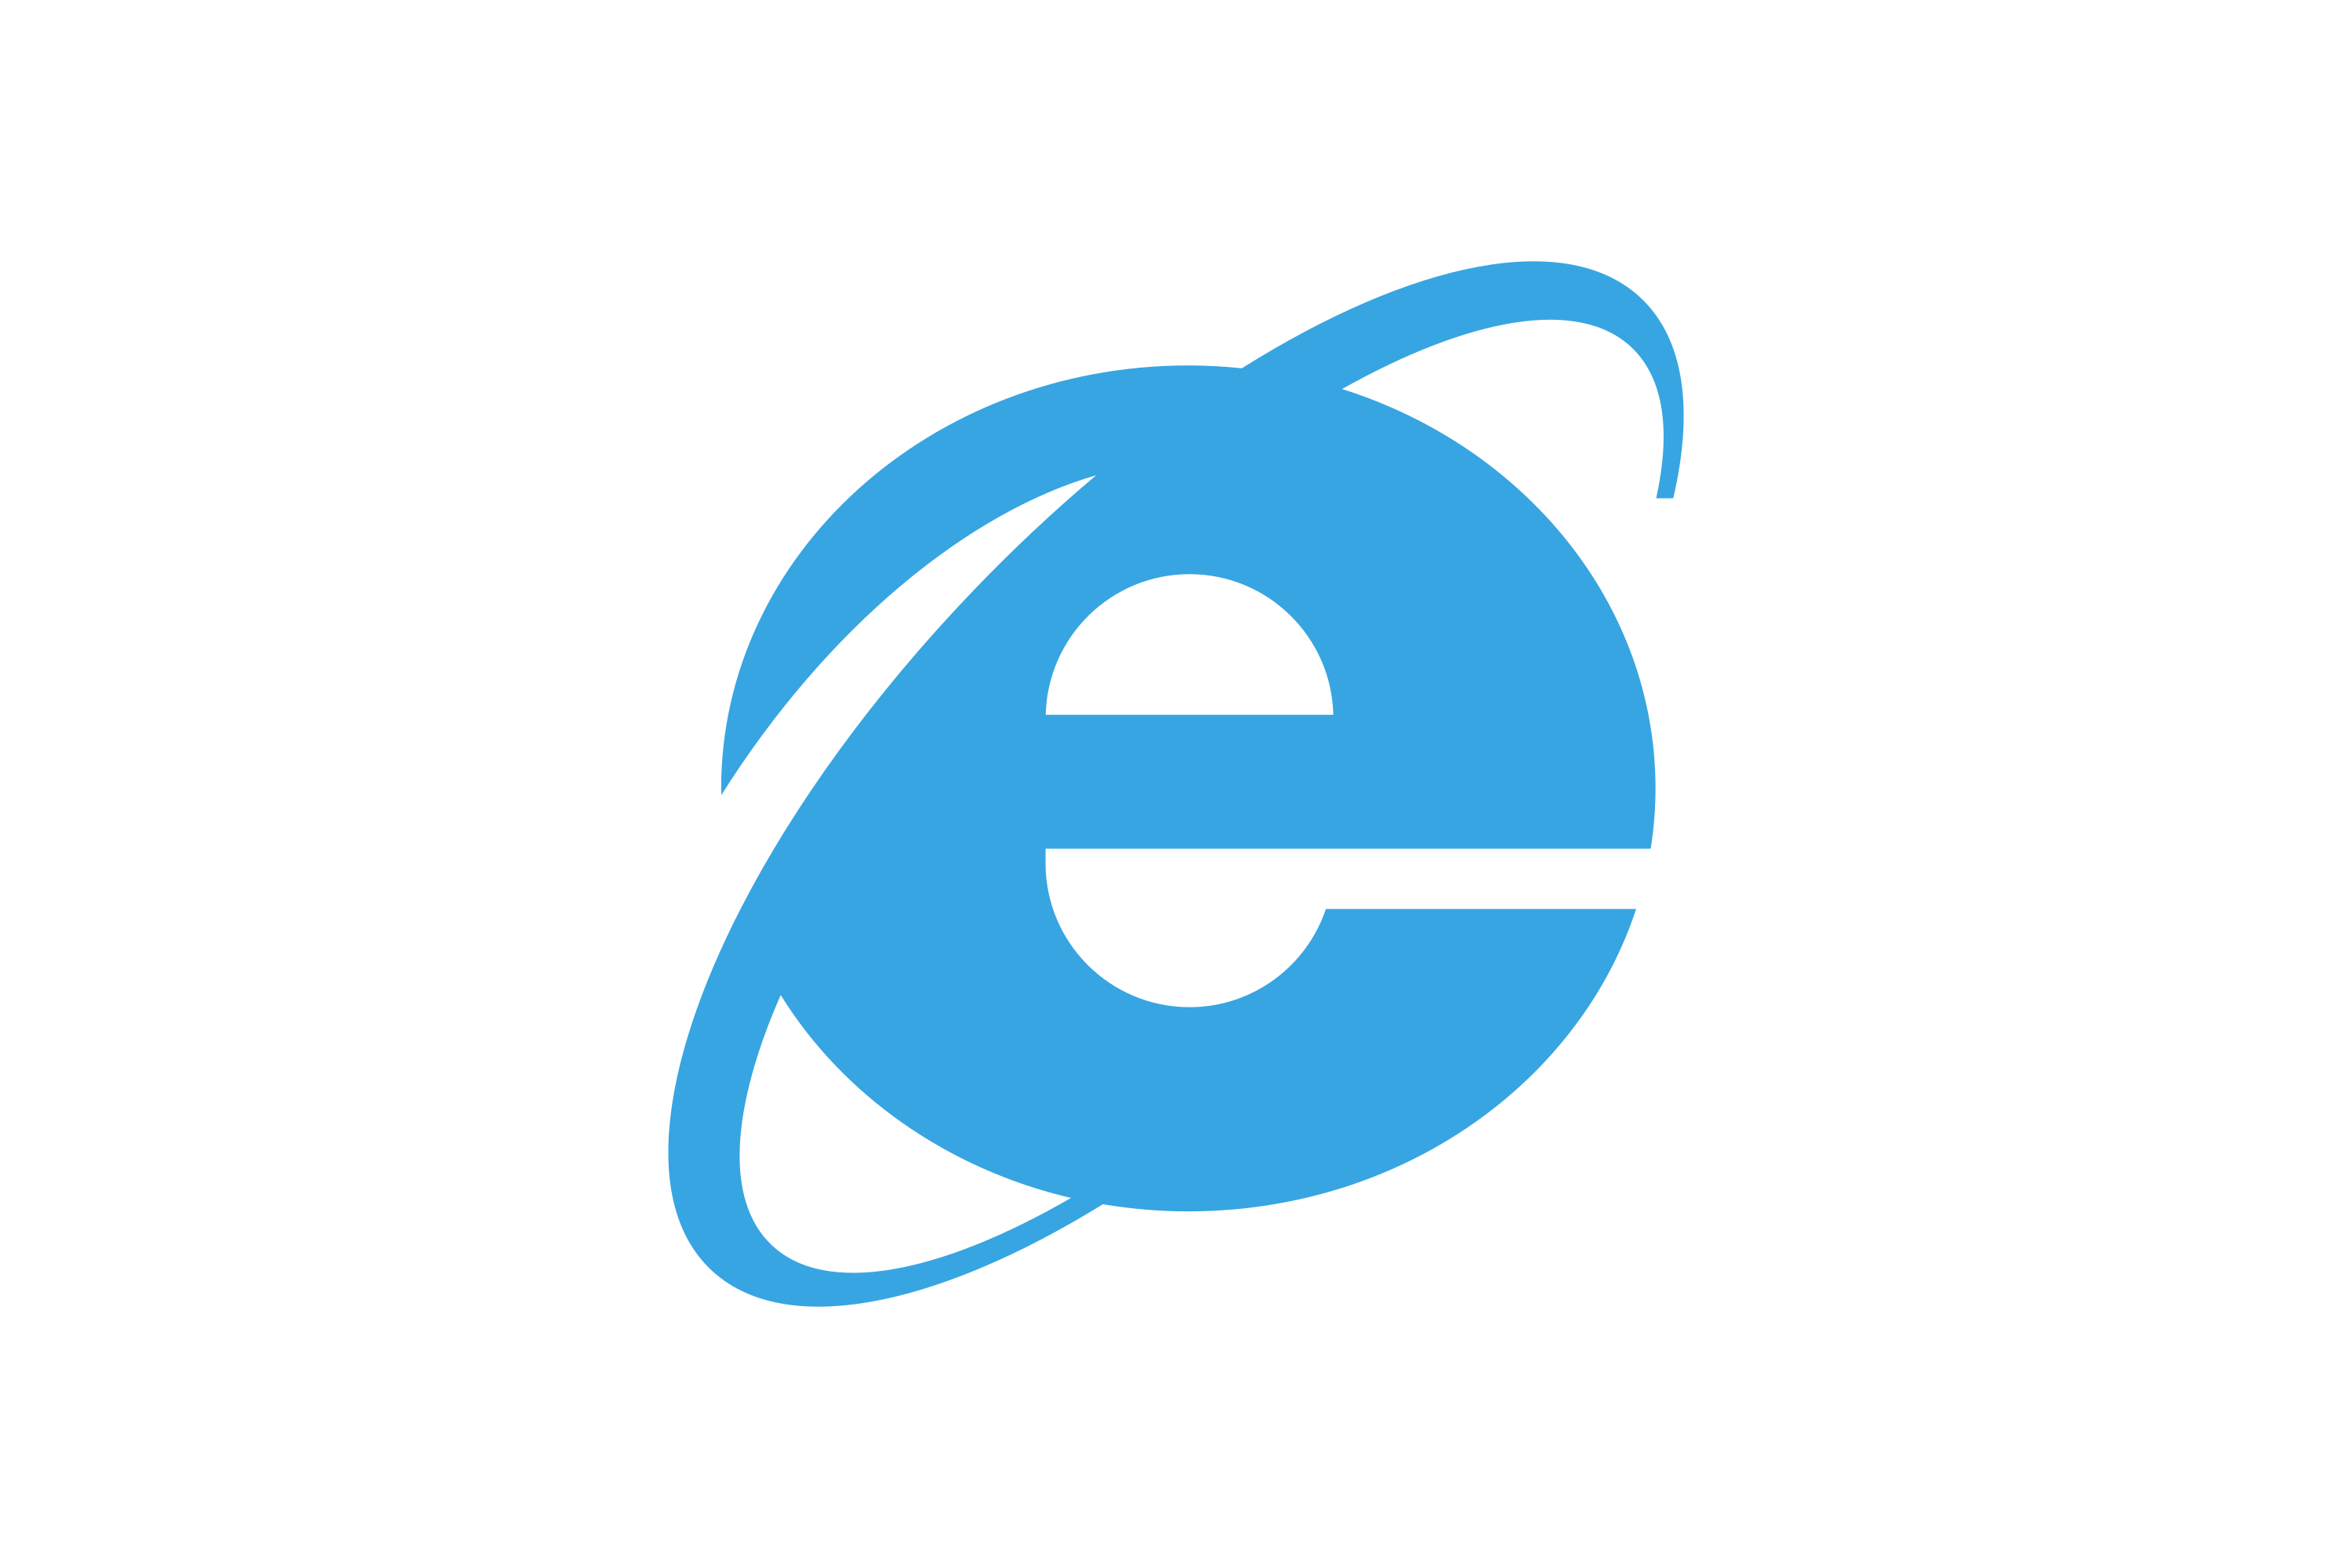 Microsoft Internet Explorer 4 Logo - Free download logo in SVG or ...